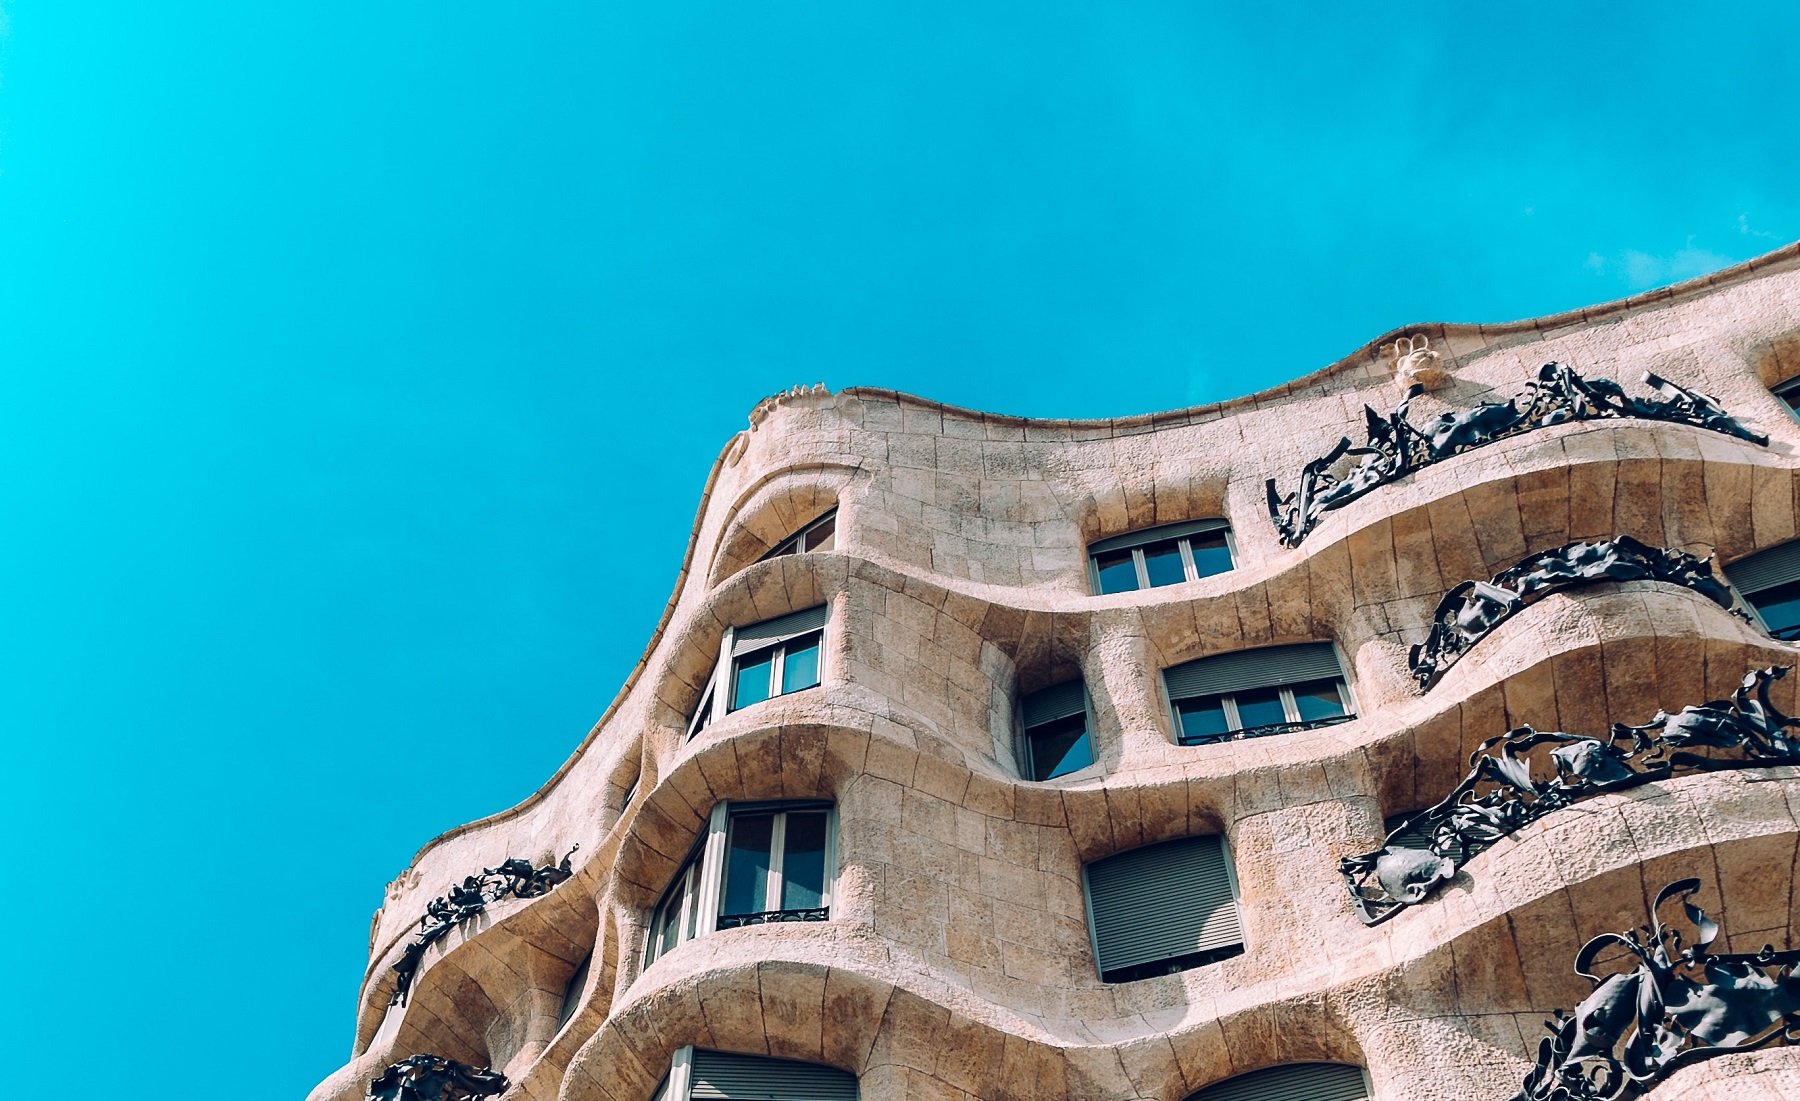 Barcelona Gaudi